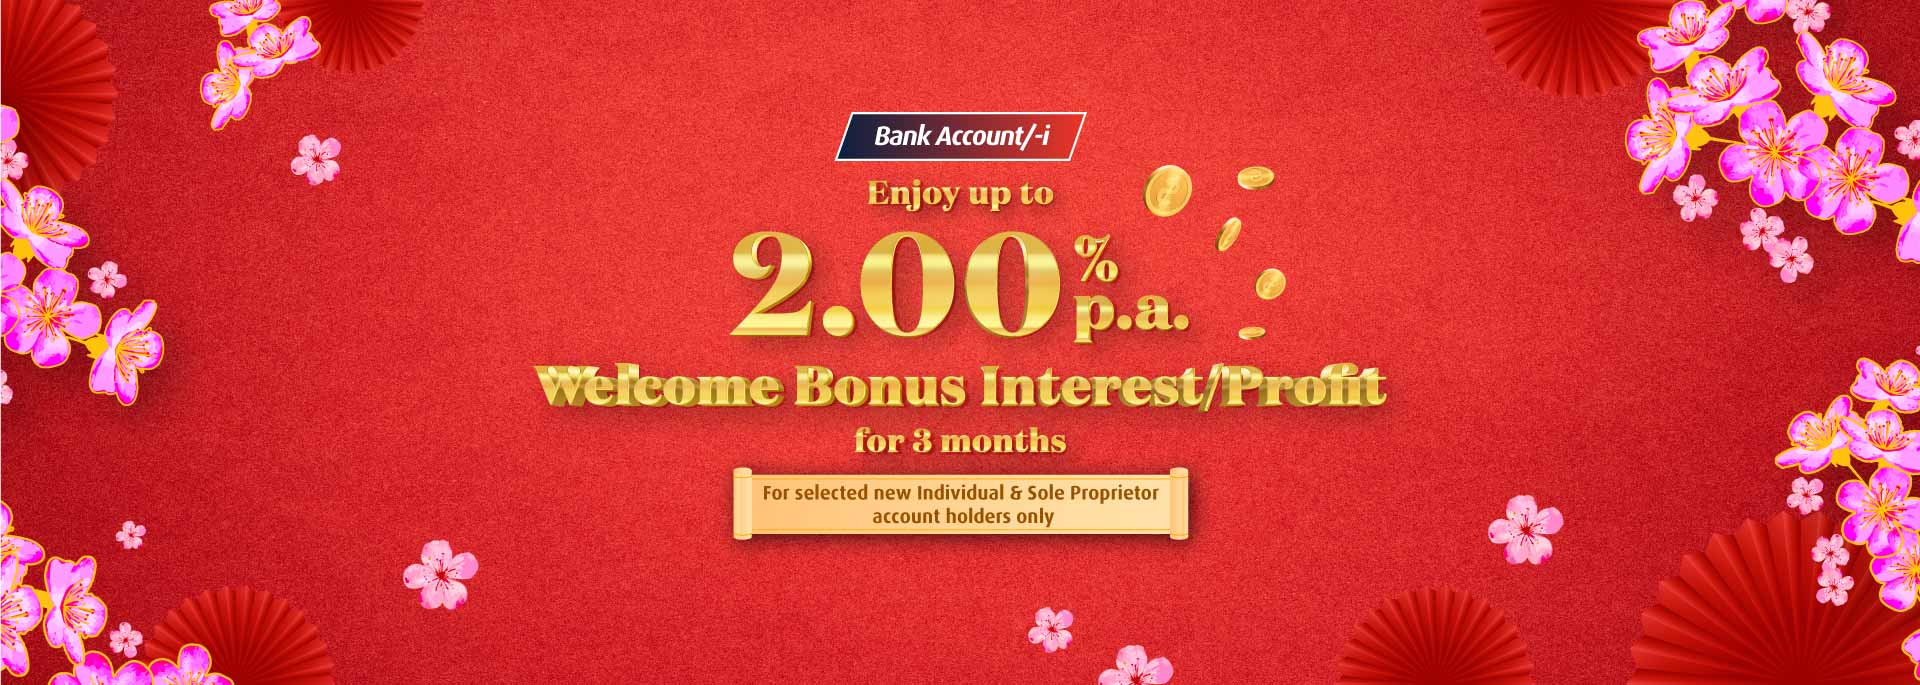 Welcome Bonus Interest for New Bank Account